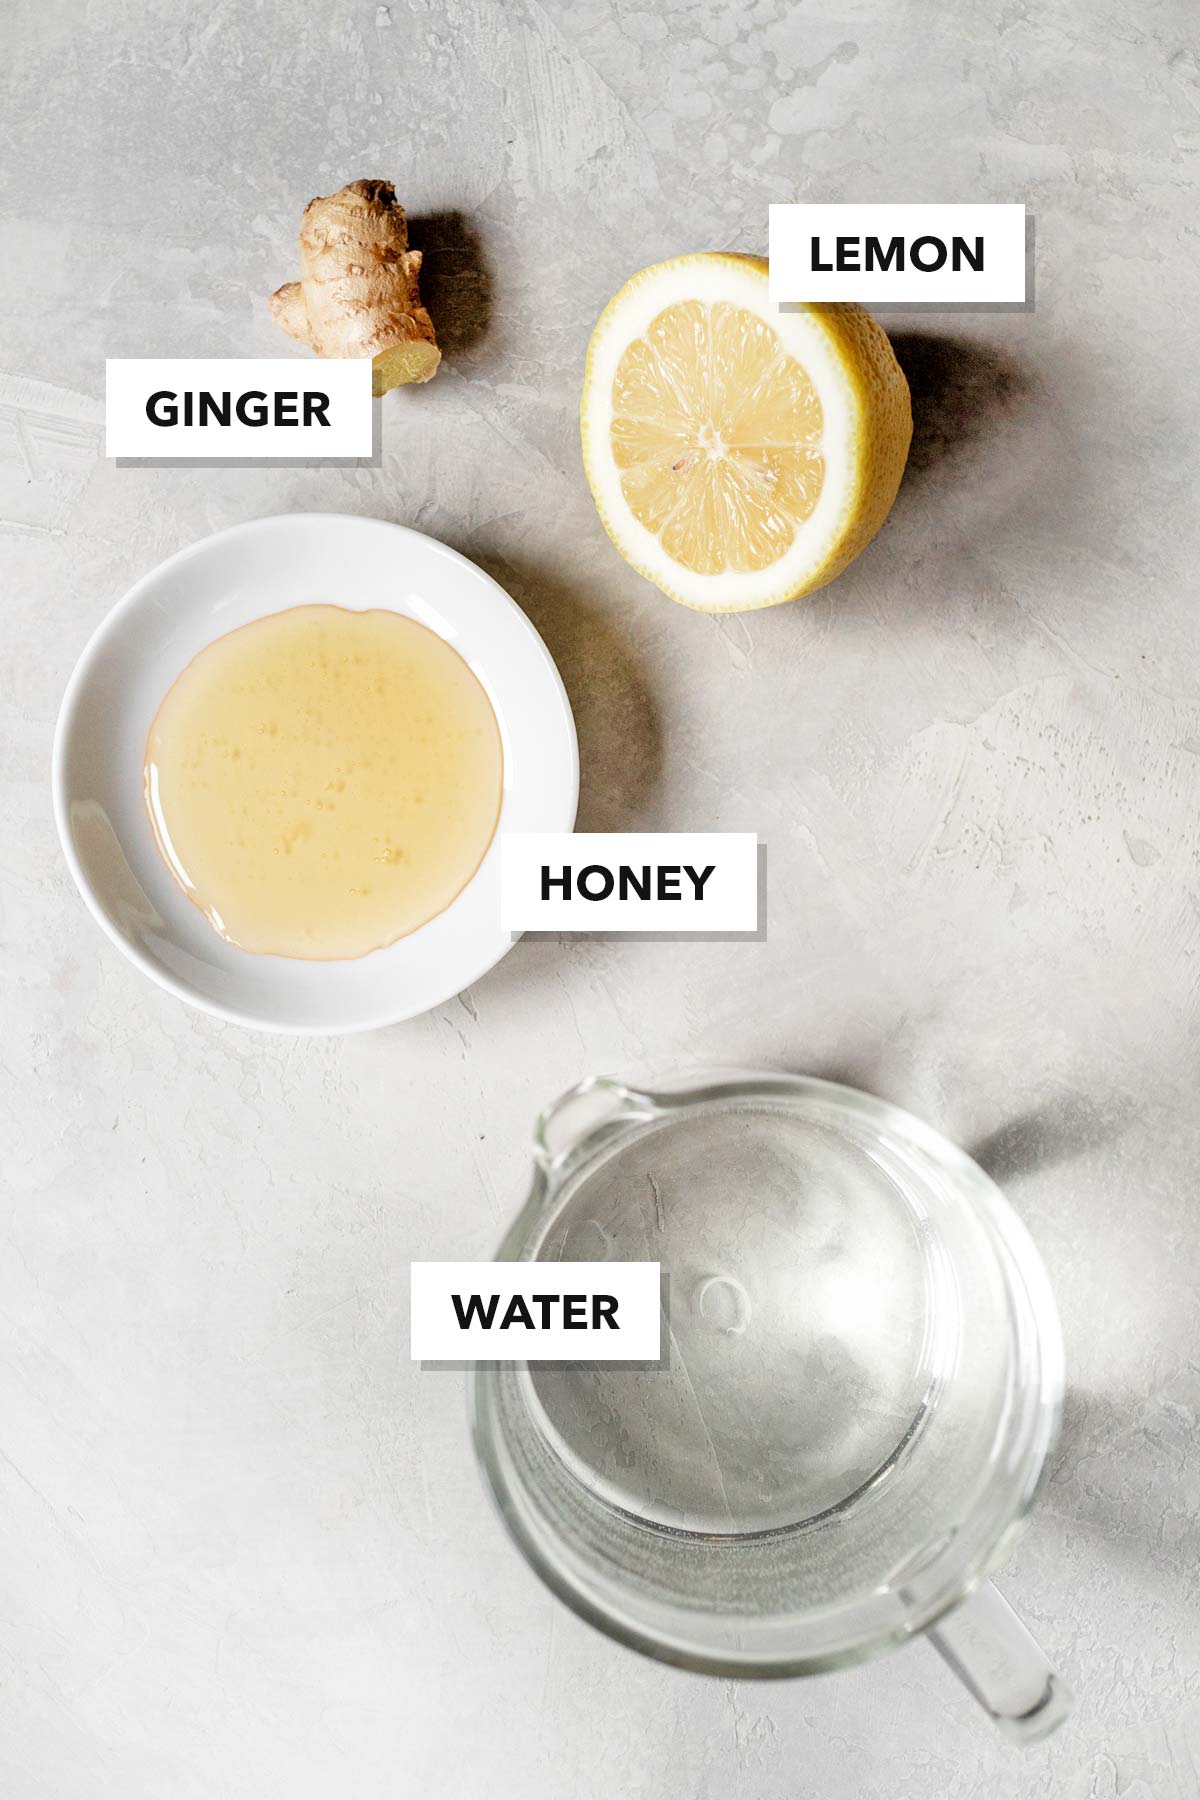 Ginger tea ingredients.